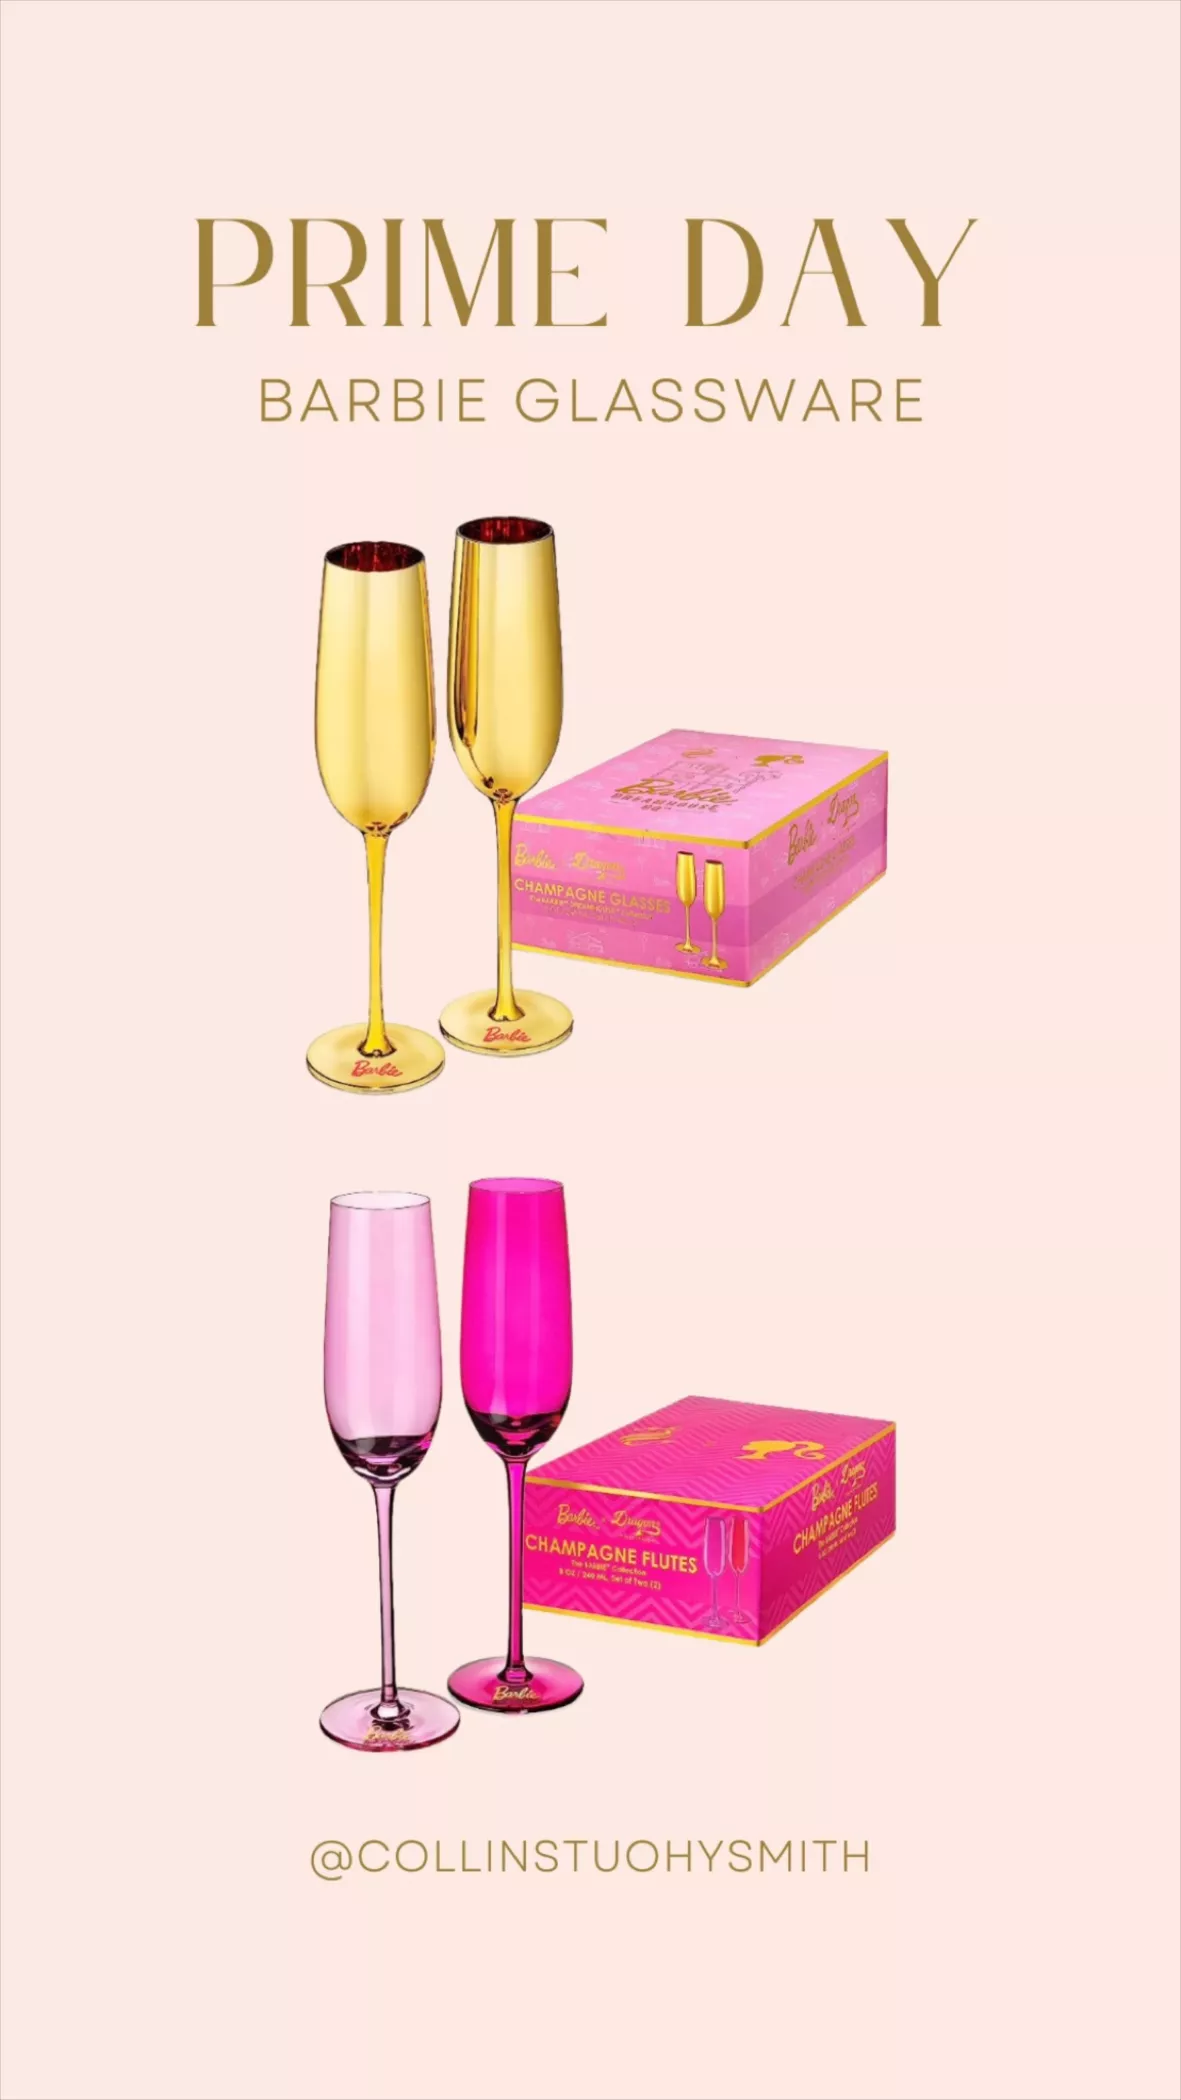 Dragon Glassware x Barbie Champagne Flutes, Barbie